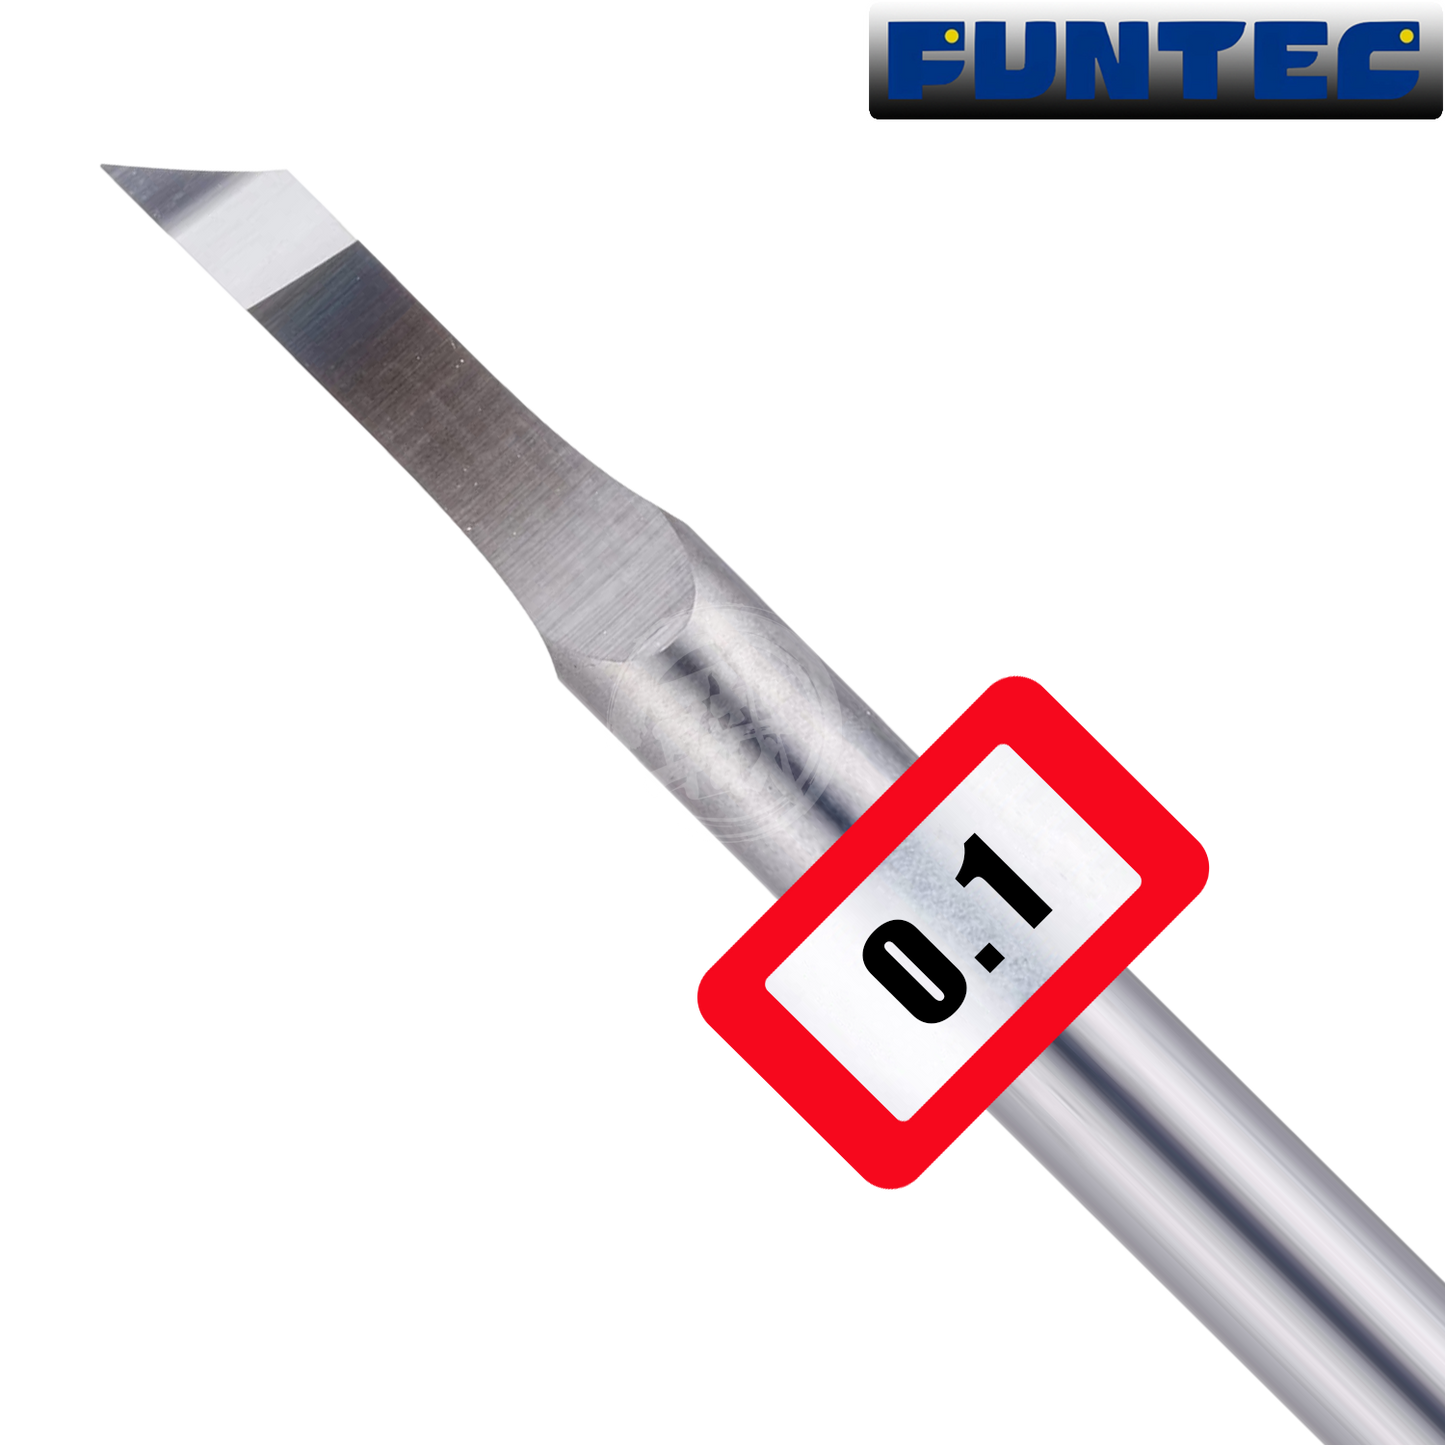 Funtec - Tungsten Carbide Chisel Bits [0.1mm] - ShokuninGunpla